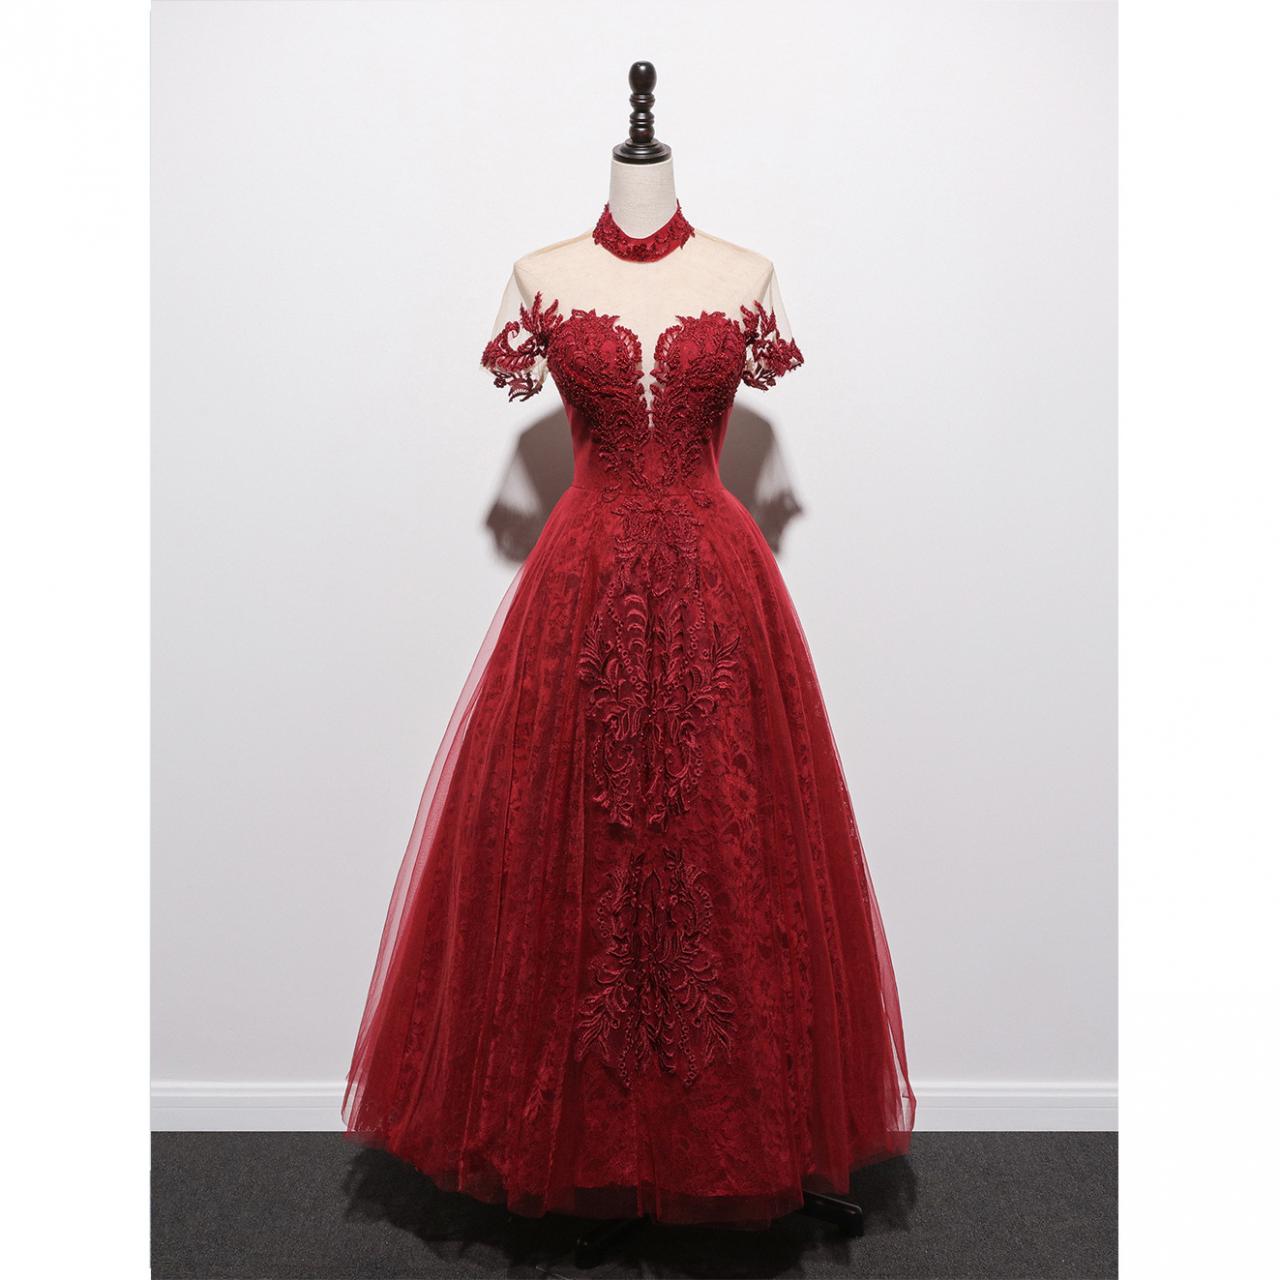 Red Prom Dress, Lace Applique Prom Dresses, High Neck Prom Dresses, Vintage Prom Dress, Robe De Soiree De Mariage, Elegant Prom Dress, A Line